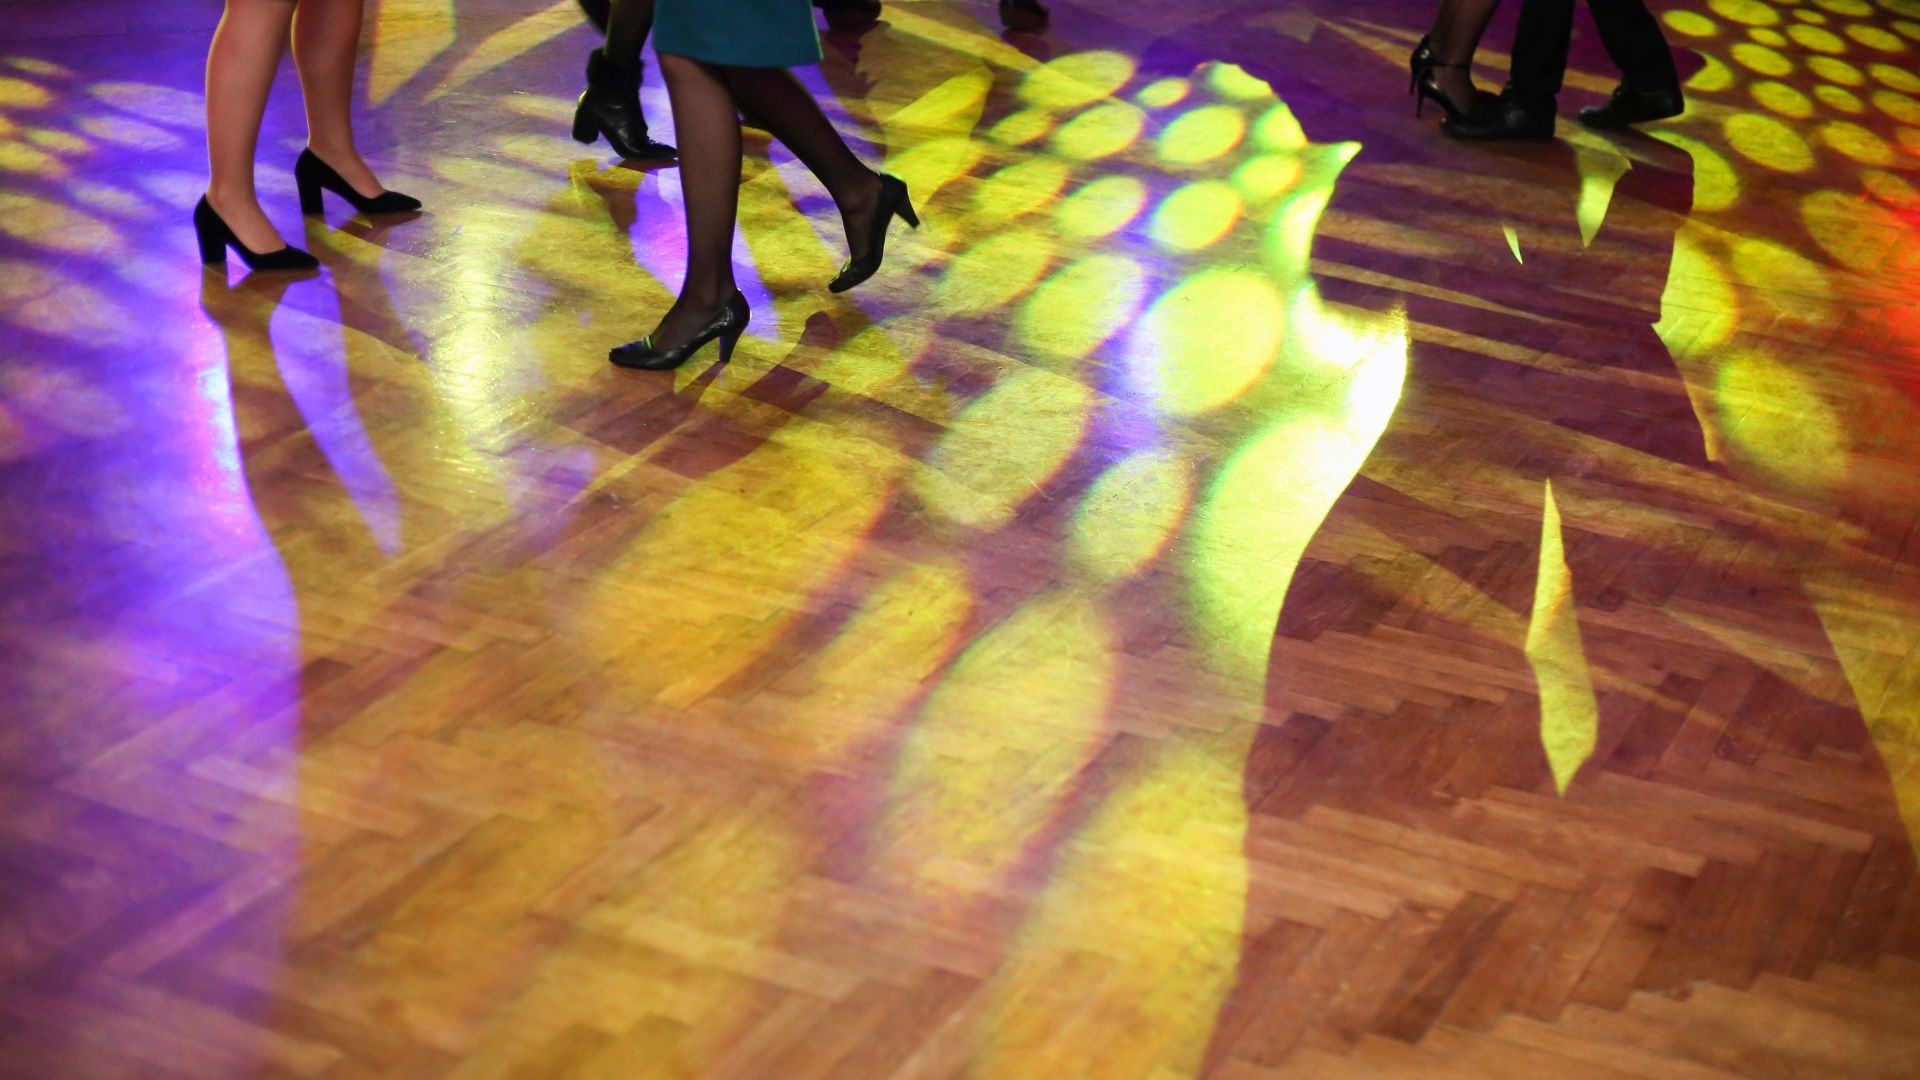 Gridded Dance Floor Systems